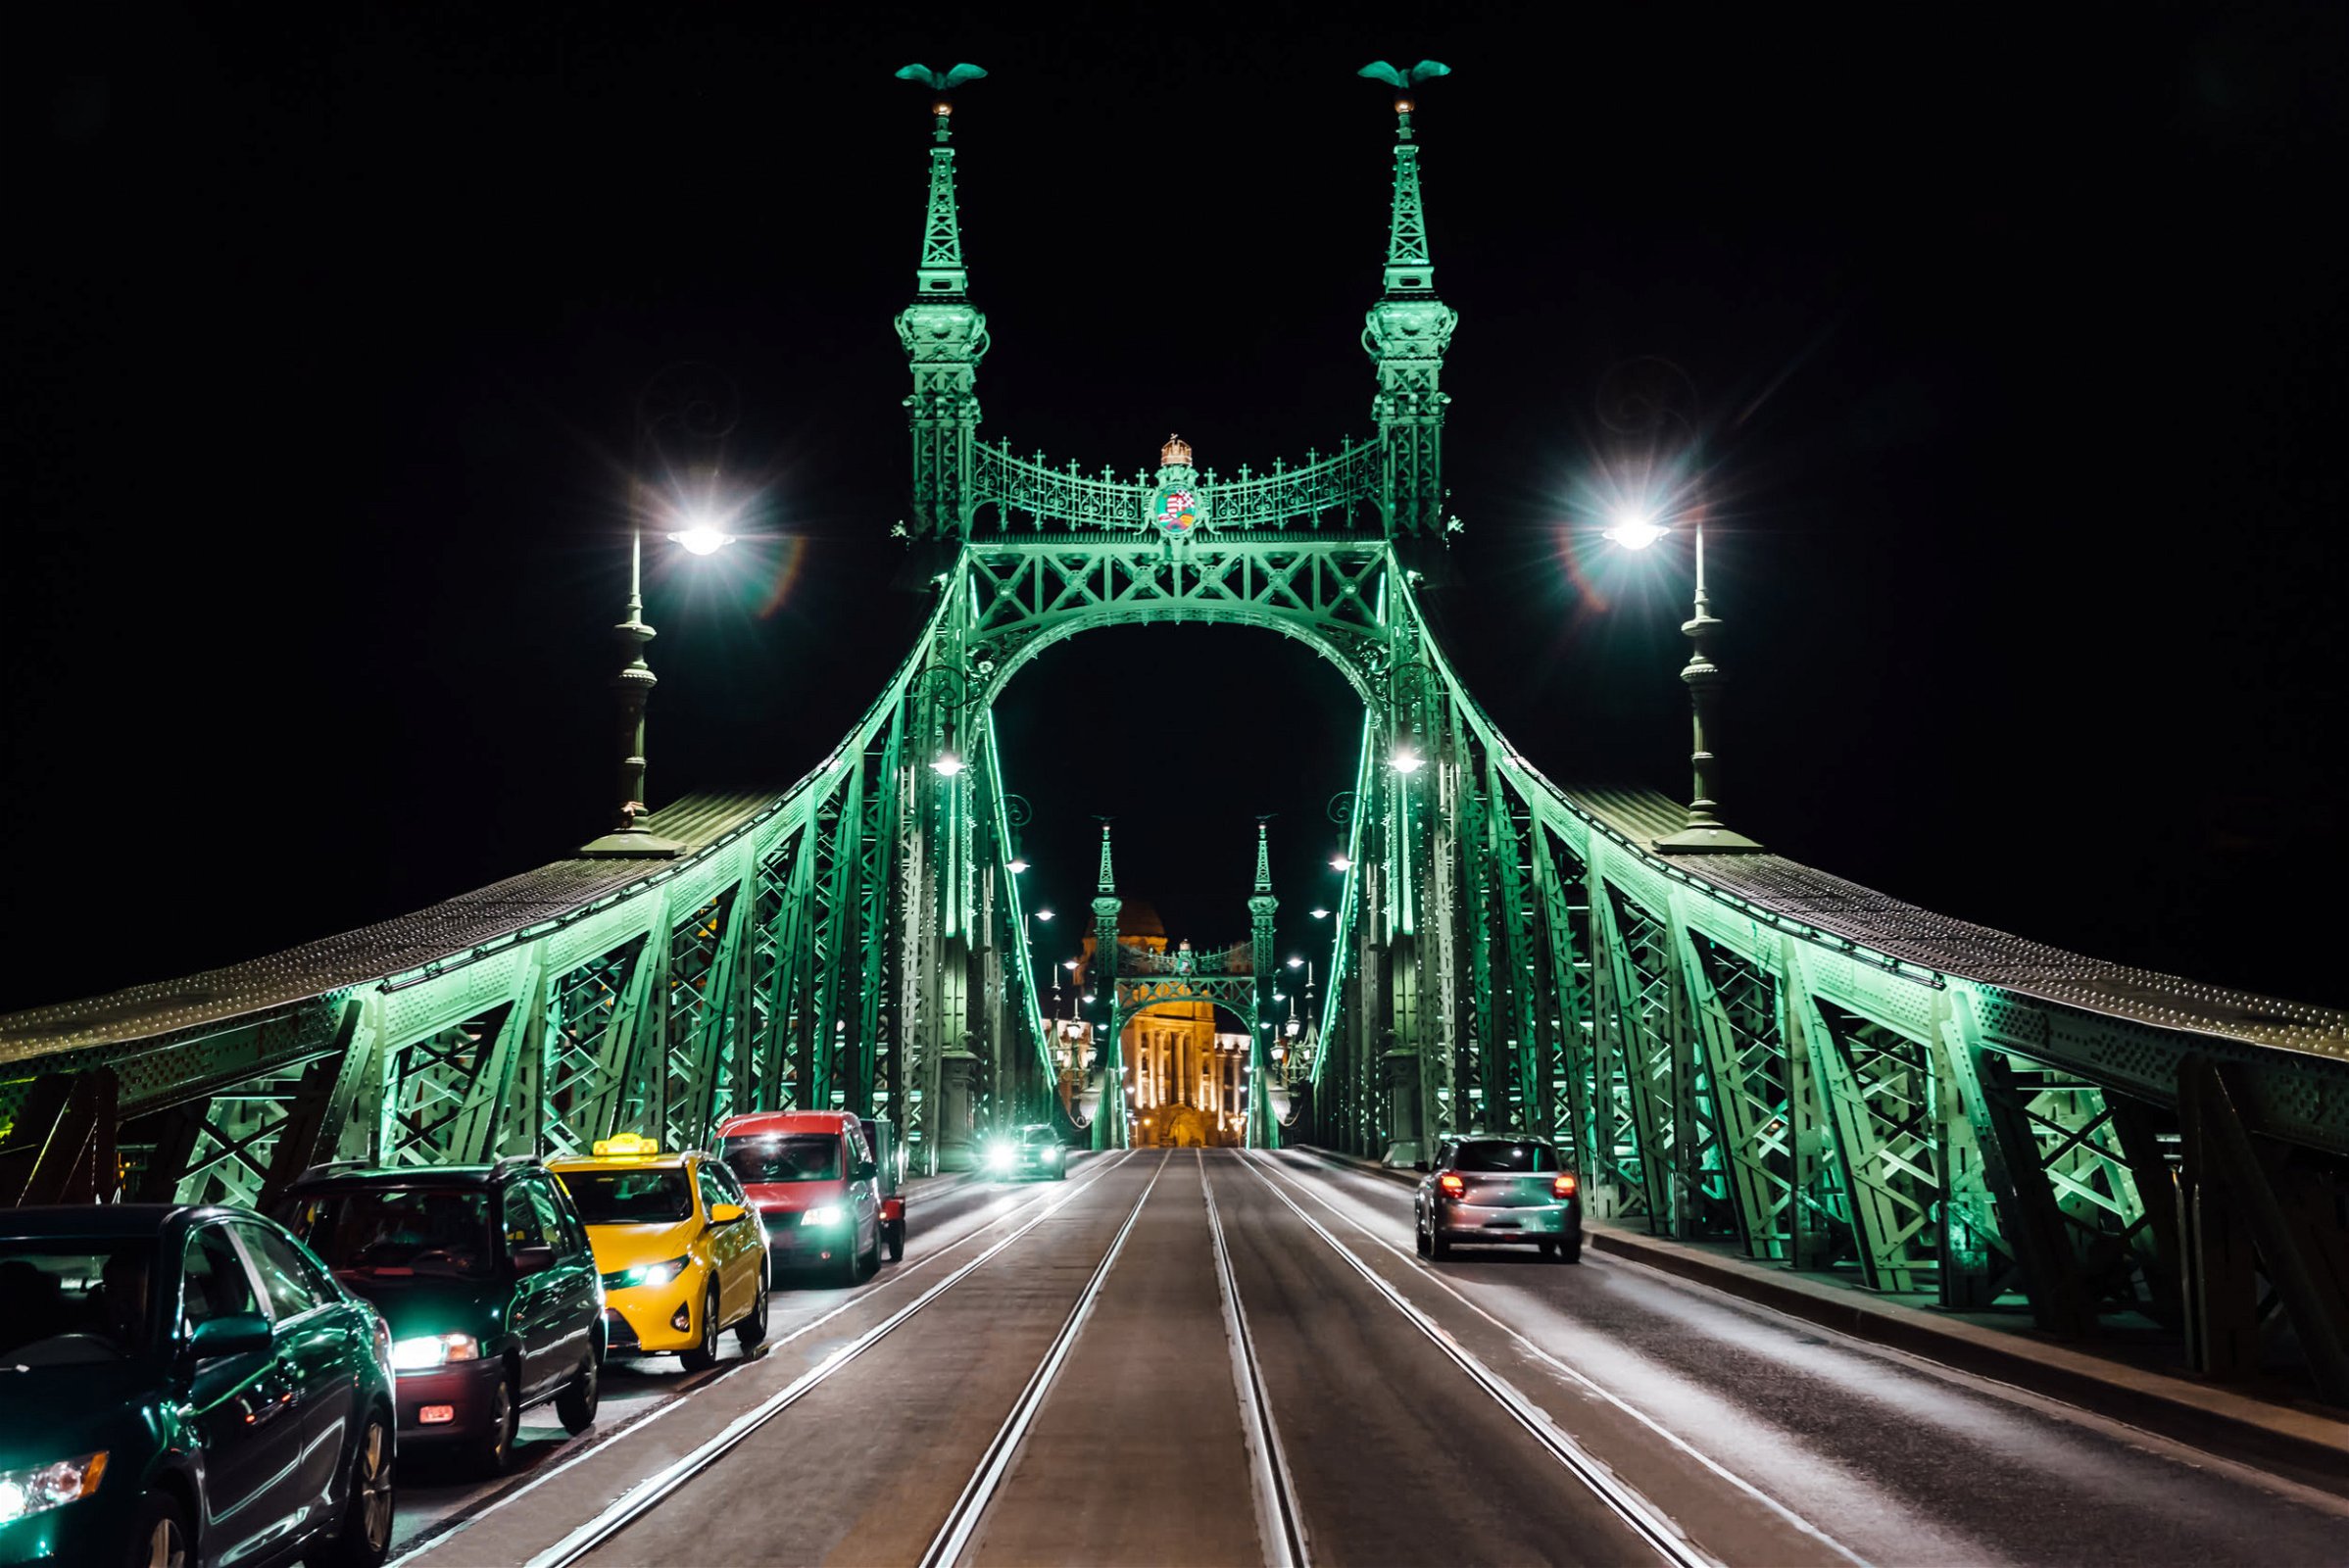 Old Iron Bridge - vakantie Hongarije